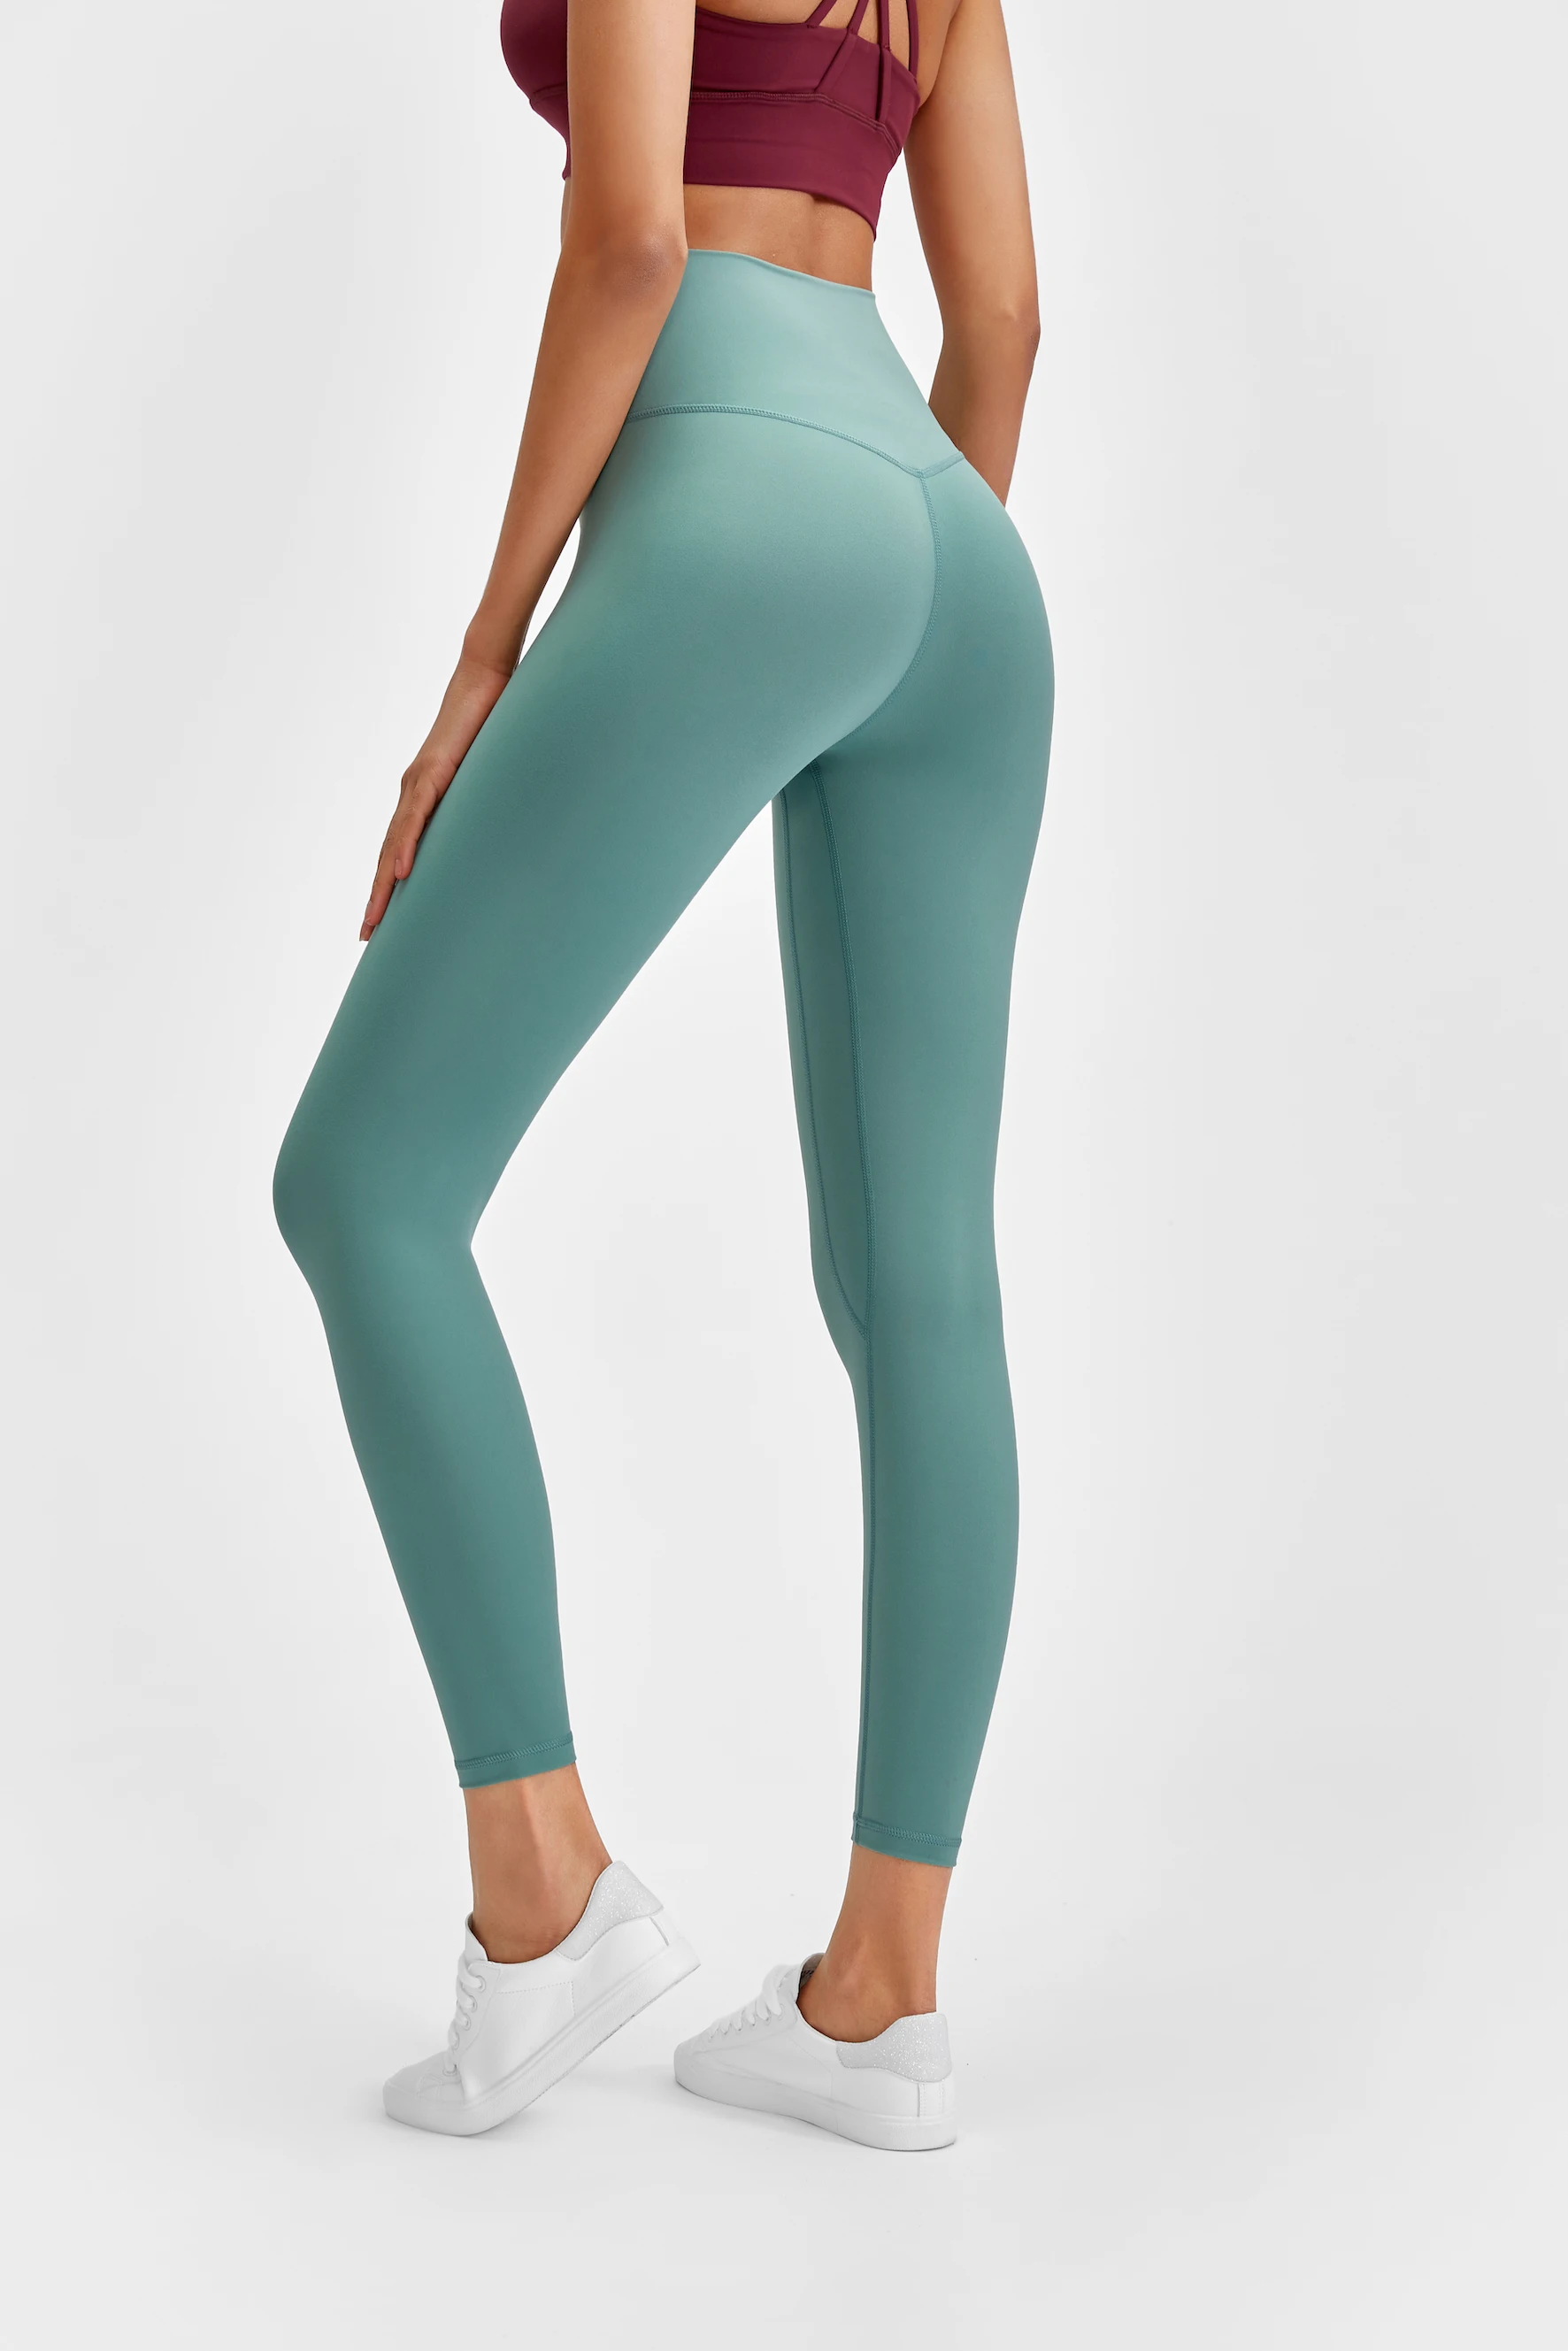 High Waisted Nylon Spandex Sports Tights Women Yoga Pants - Buy Women ...